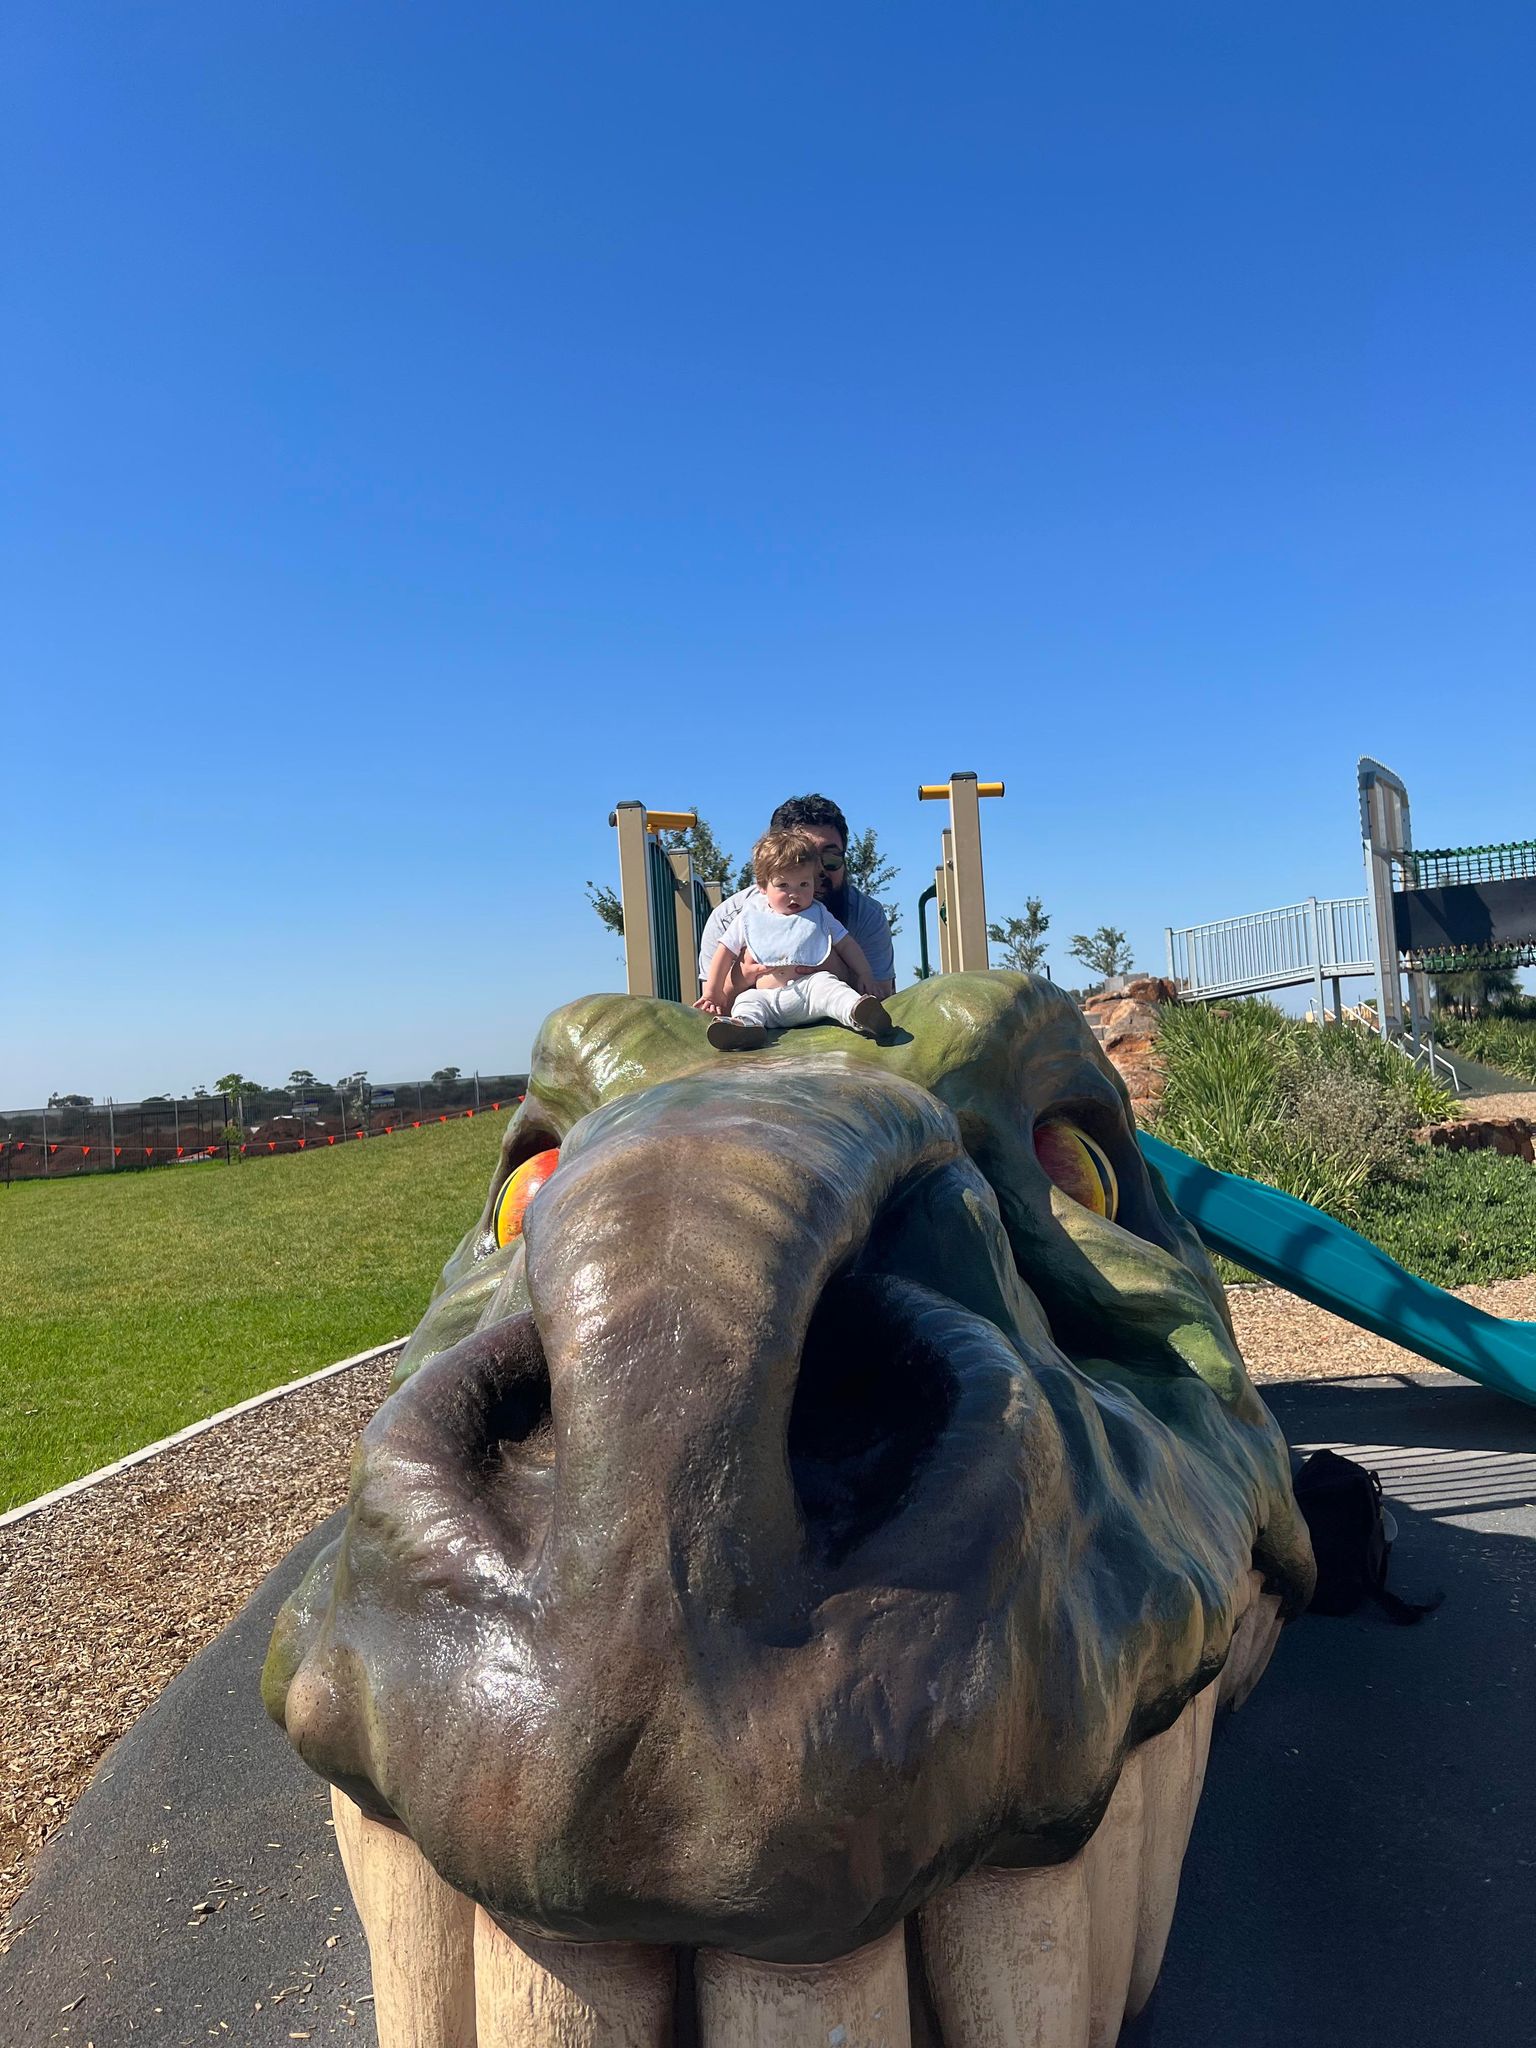 Dinosaur Park Playground truganina overview dinosaur head feature